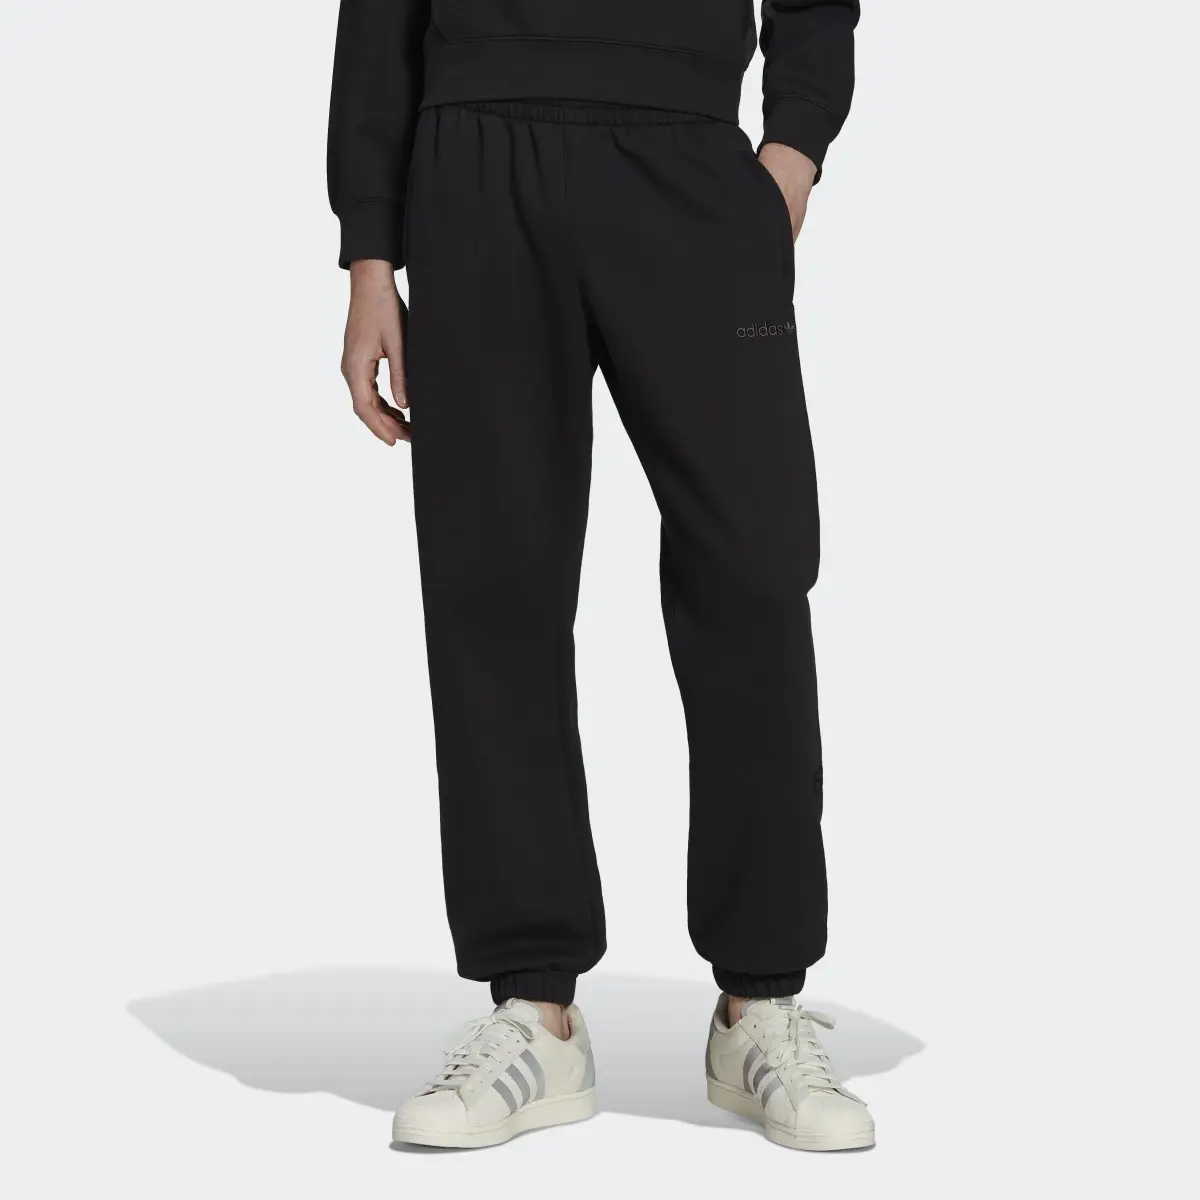 Adidas Trefoil Linear Sweat Pants. 1